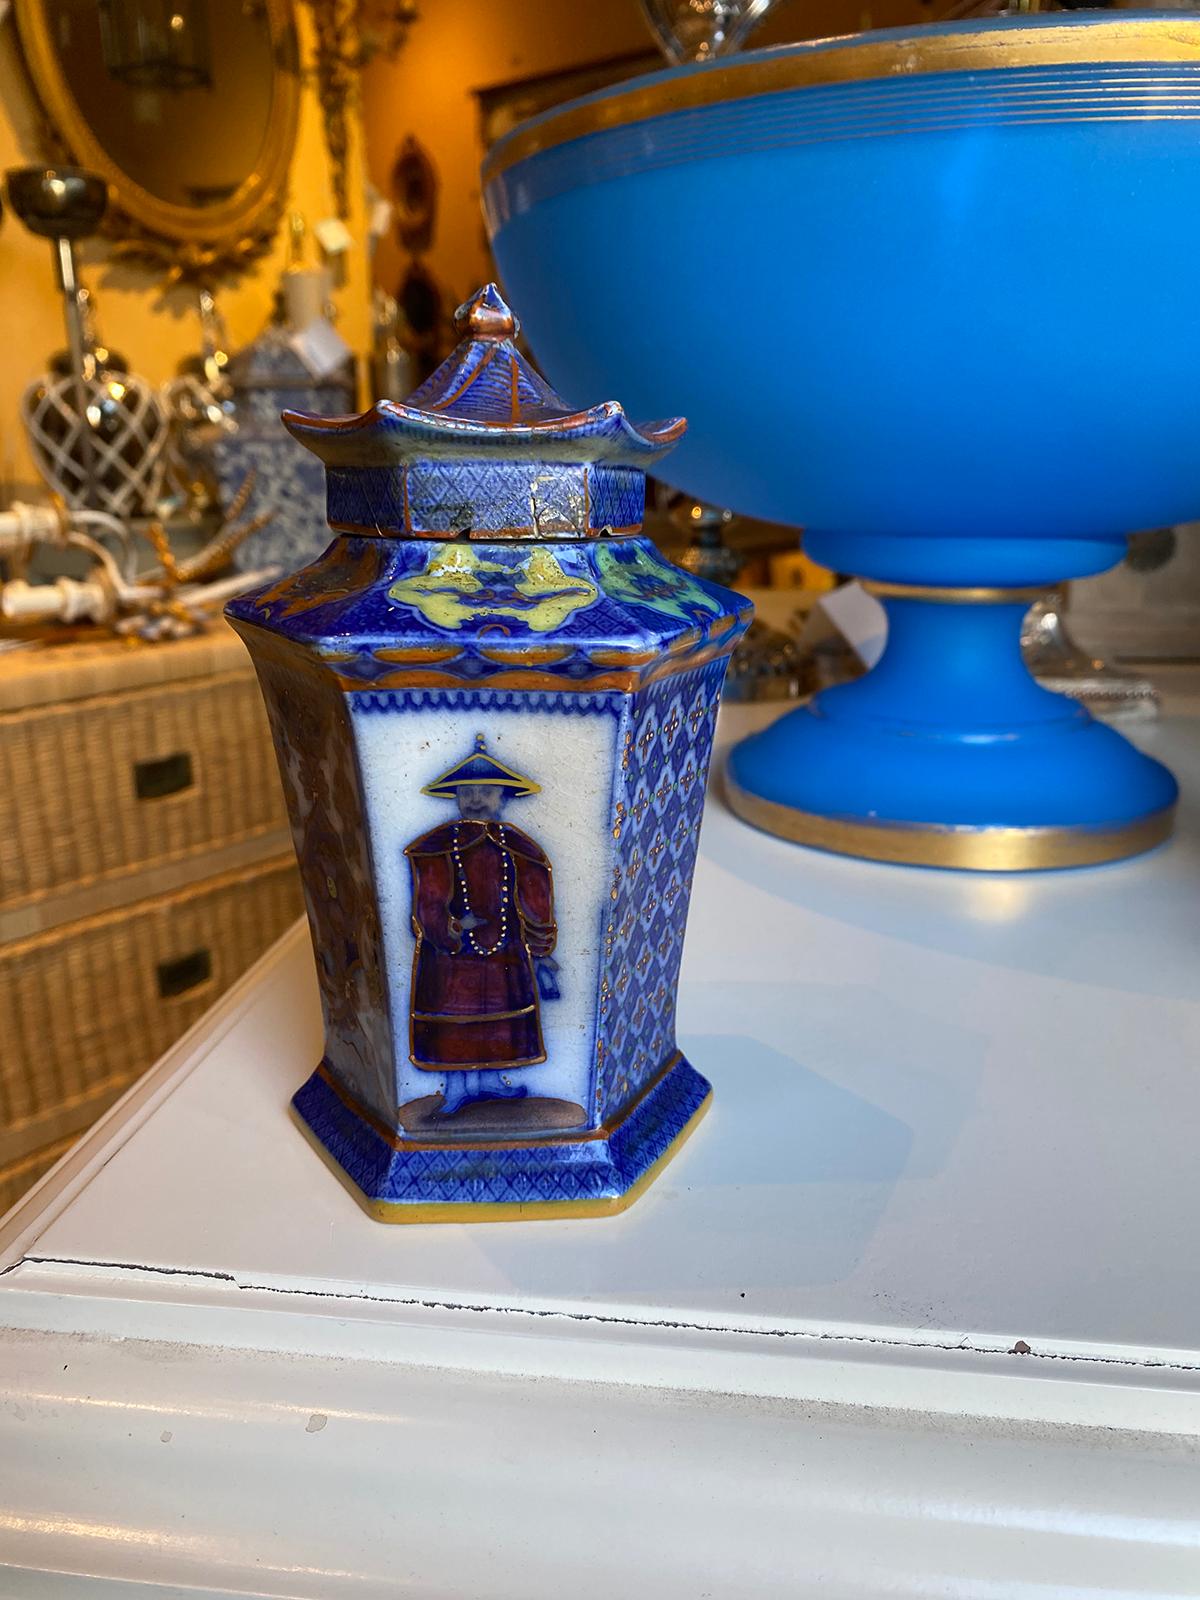 19th century circa 1820-1830s English probably Mason’s polychrome porcelain hexagonal jar, pagoda lid. Possibly old snuff jar.